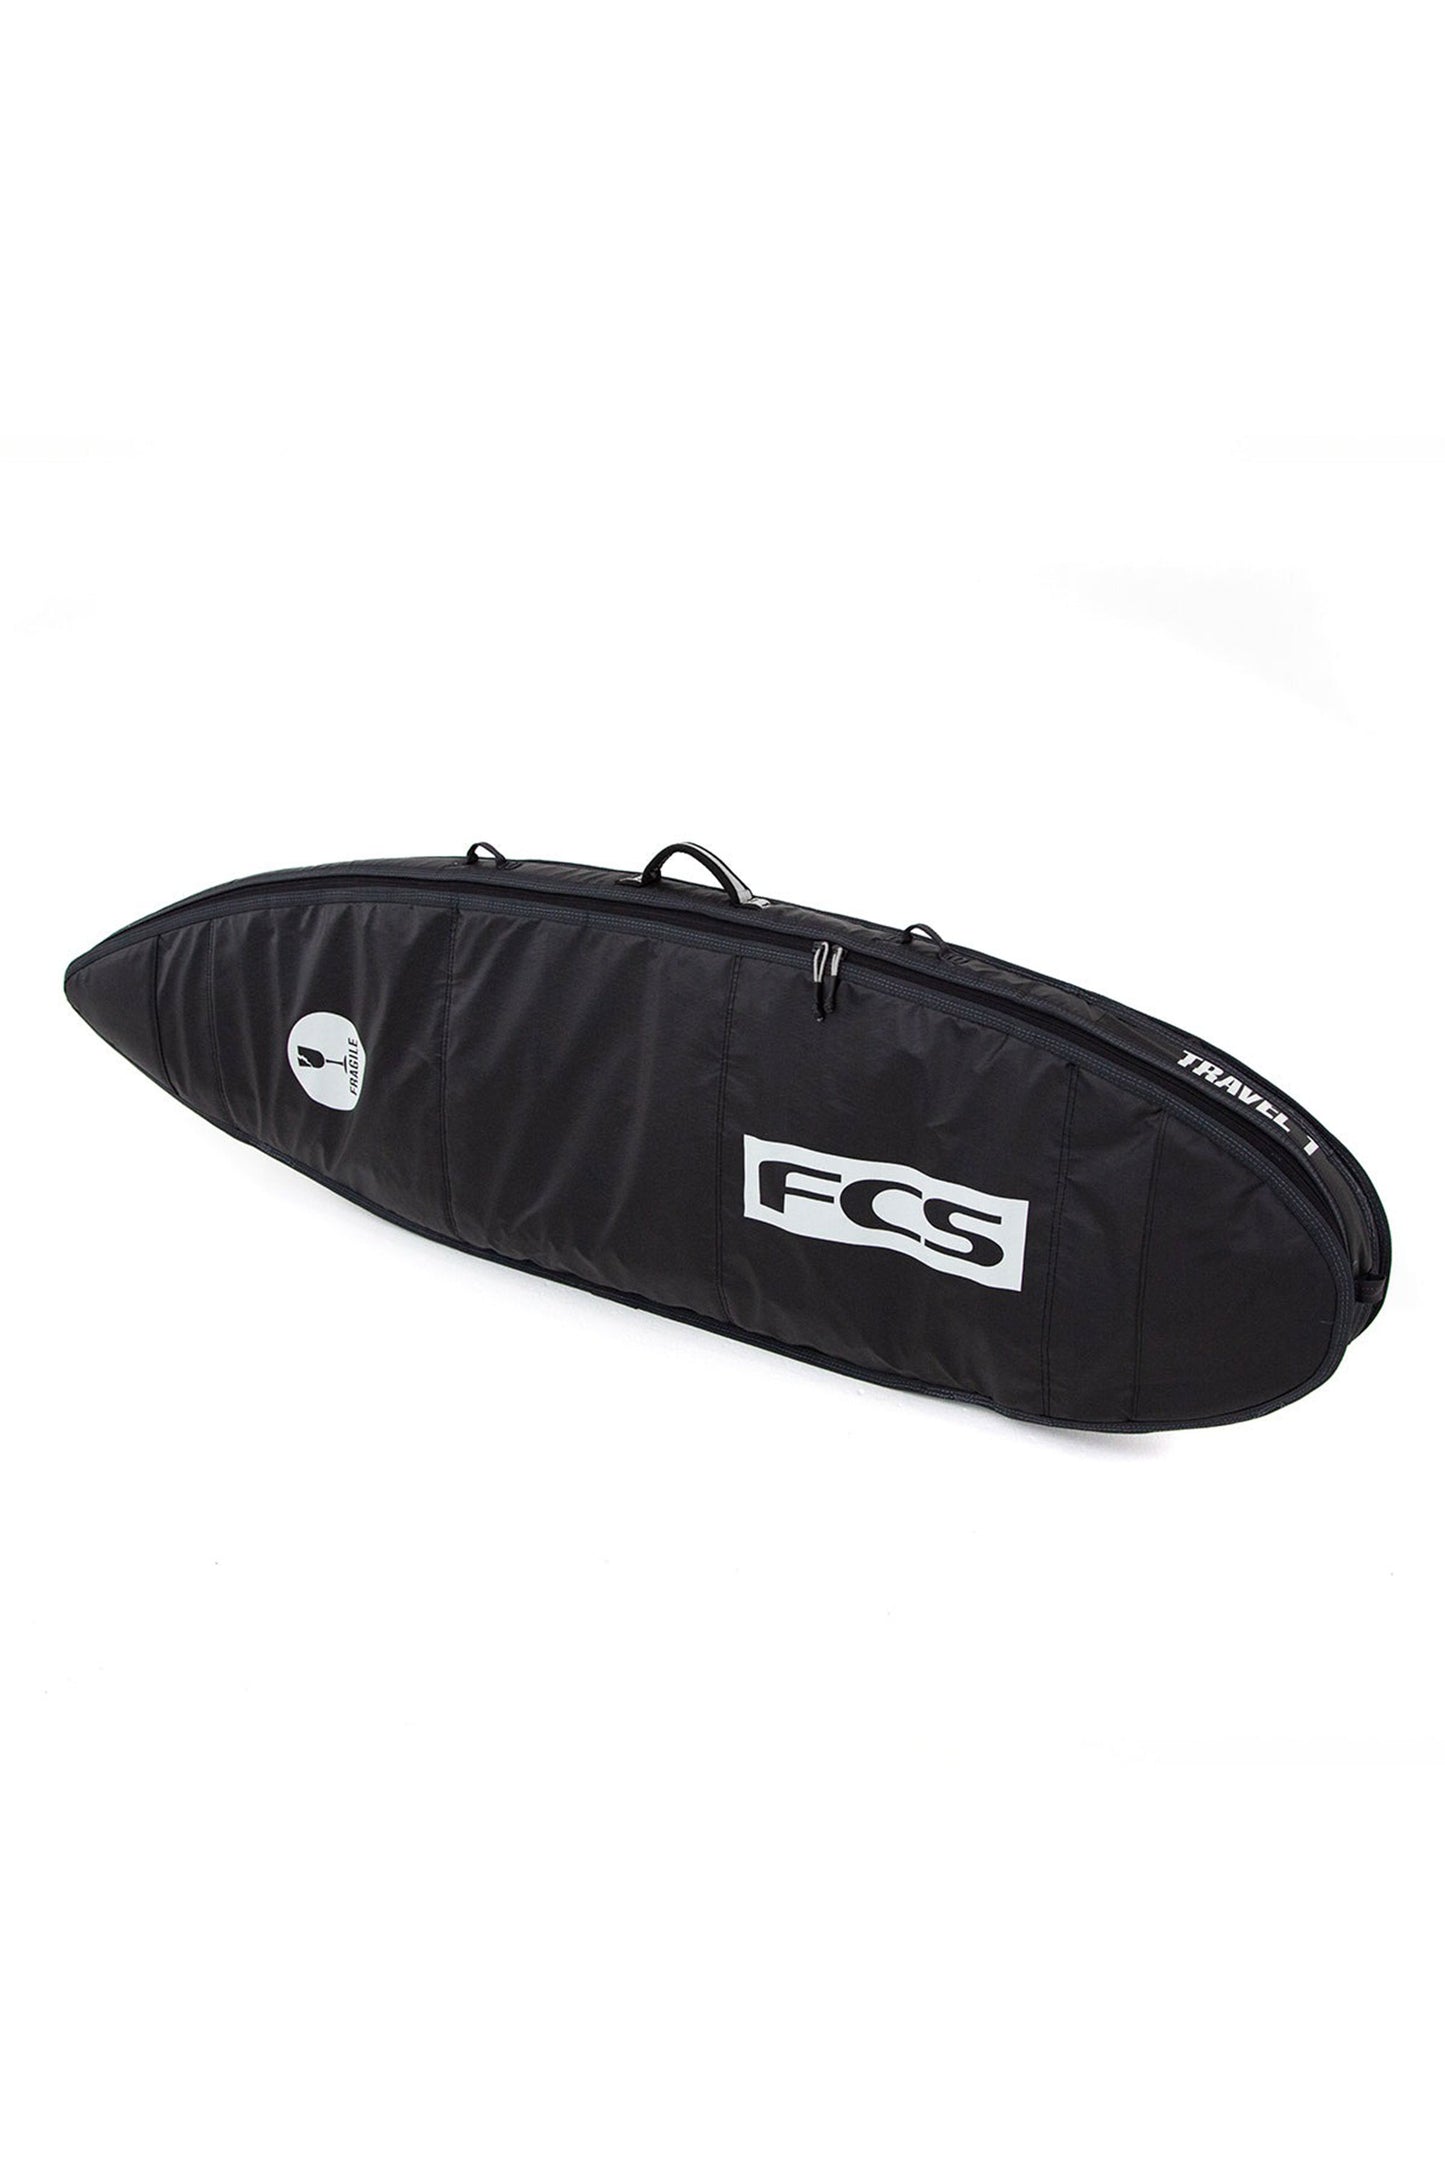 Pukas-Surf-Shop-FCS-Boardbag-Travel-All-Purpose-Black